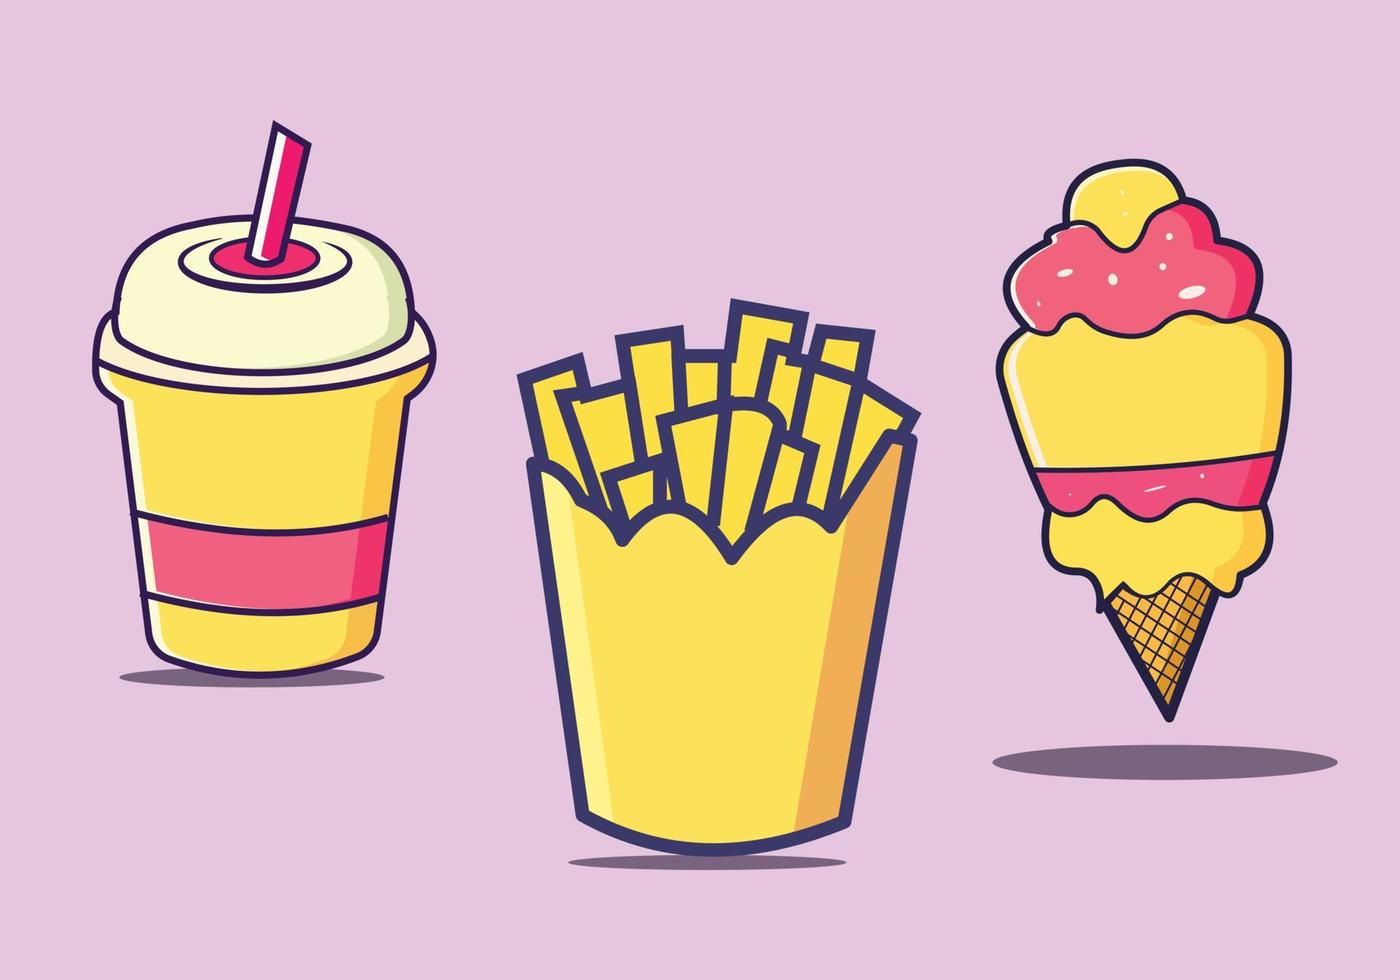 rápido comida equipo vector ilustracion.hielo crema cono, frio café, francés papas fritas dibujos animados.